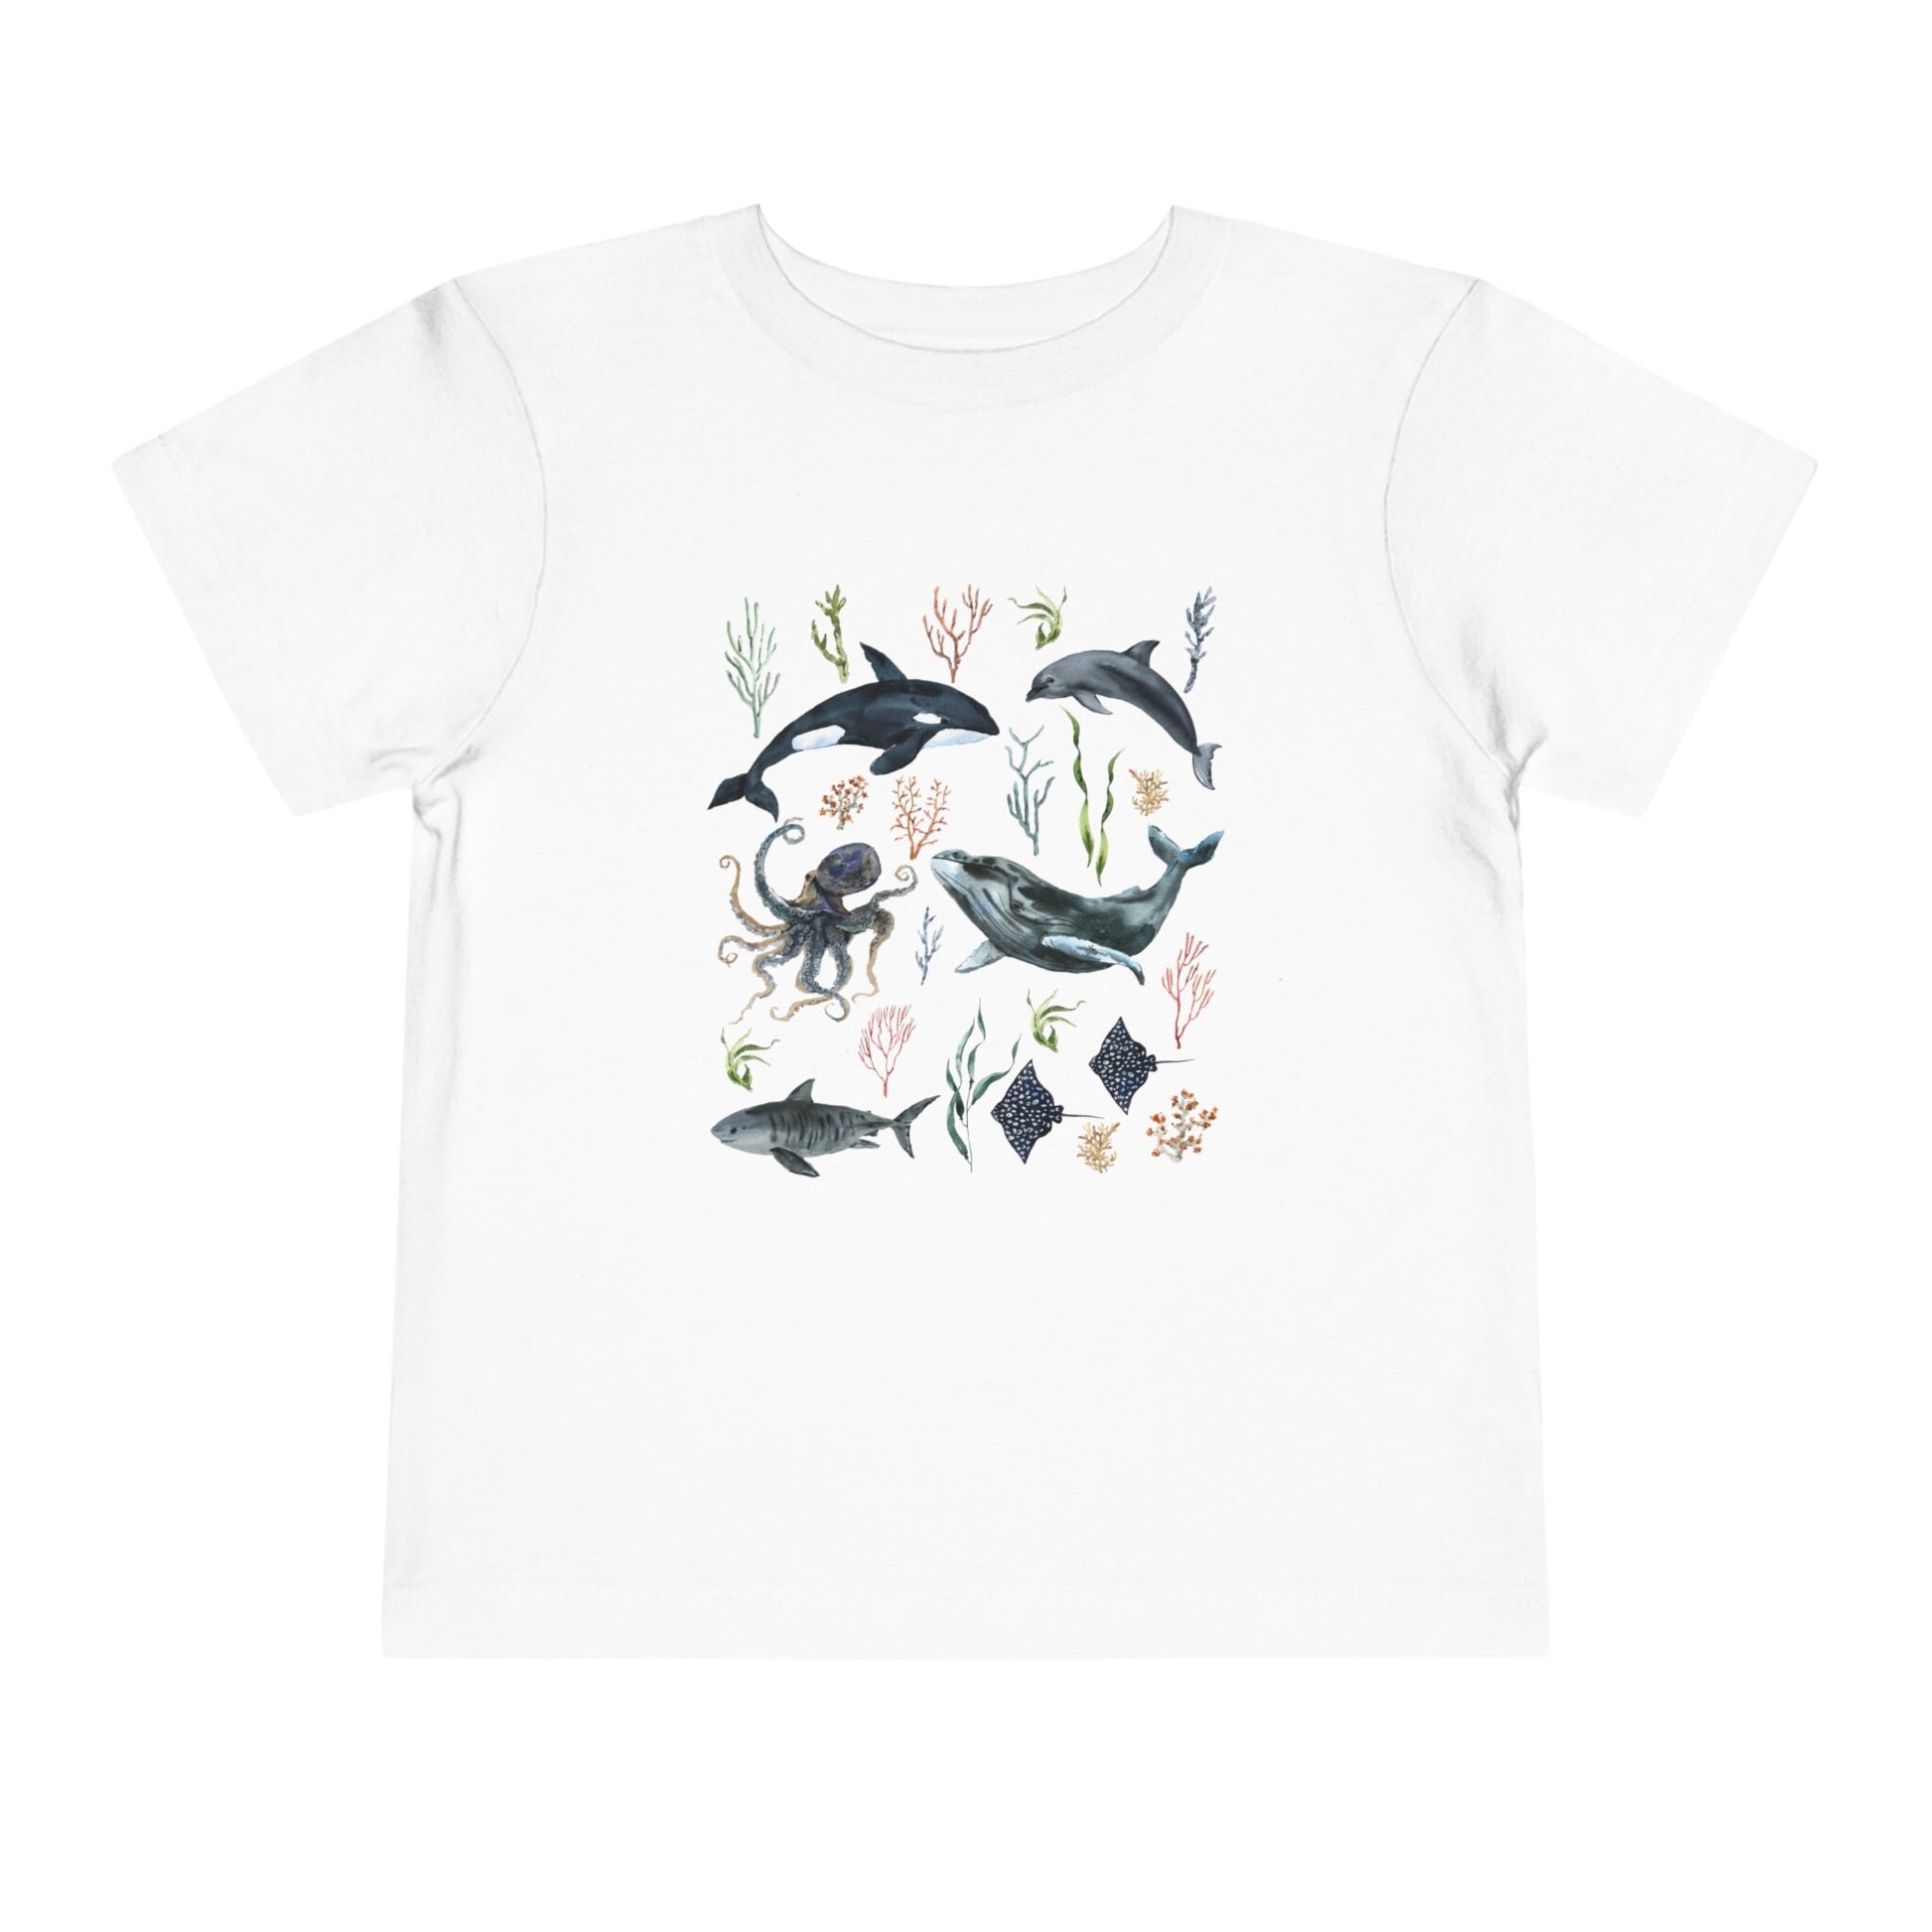 Oceancore Shirt Kids Whale Shirt Toddler Mermaidcore Sea Birthday Party Shark Tee Nature Lover Shirt for Girl Boys Unisex Ocean Animal Tee